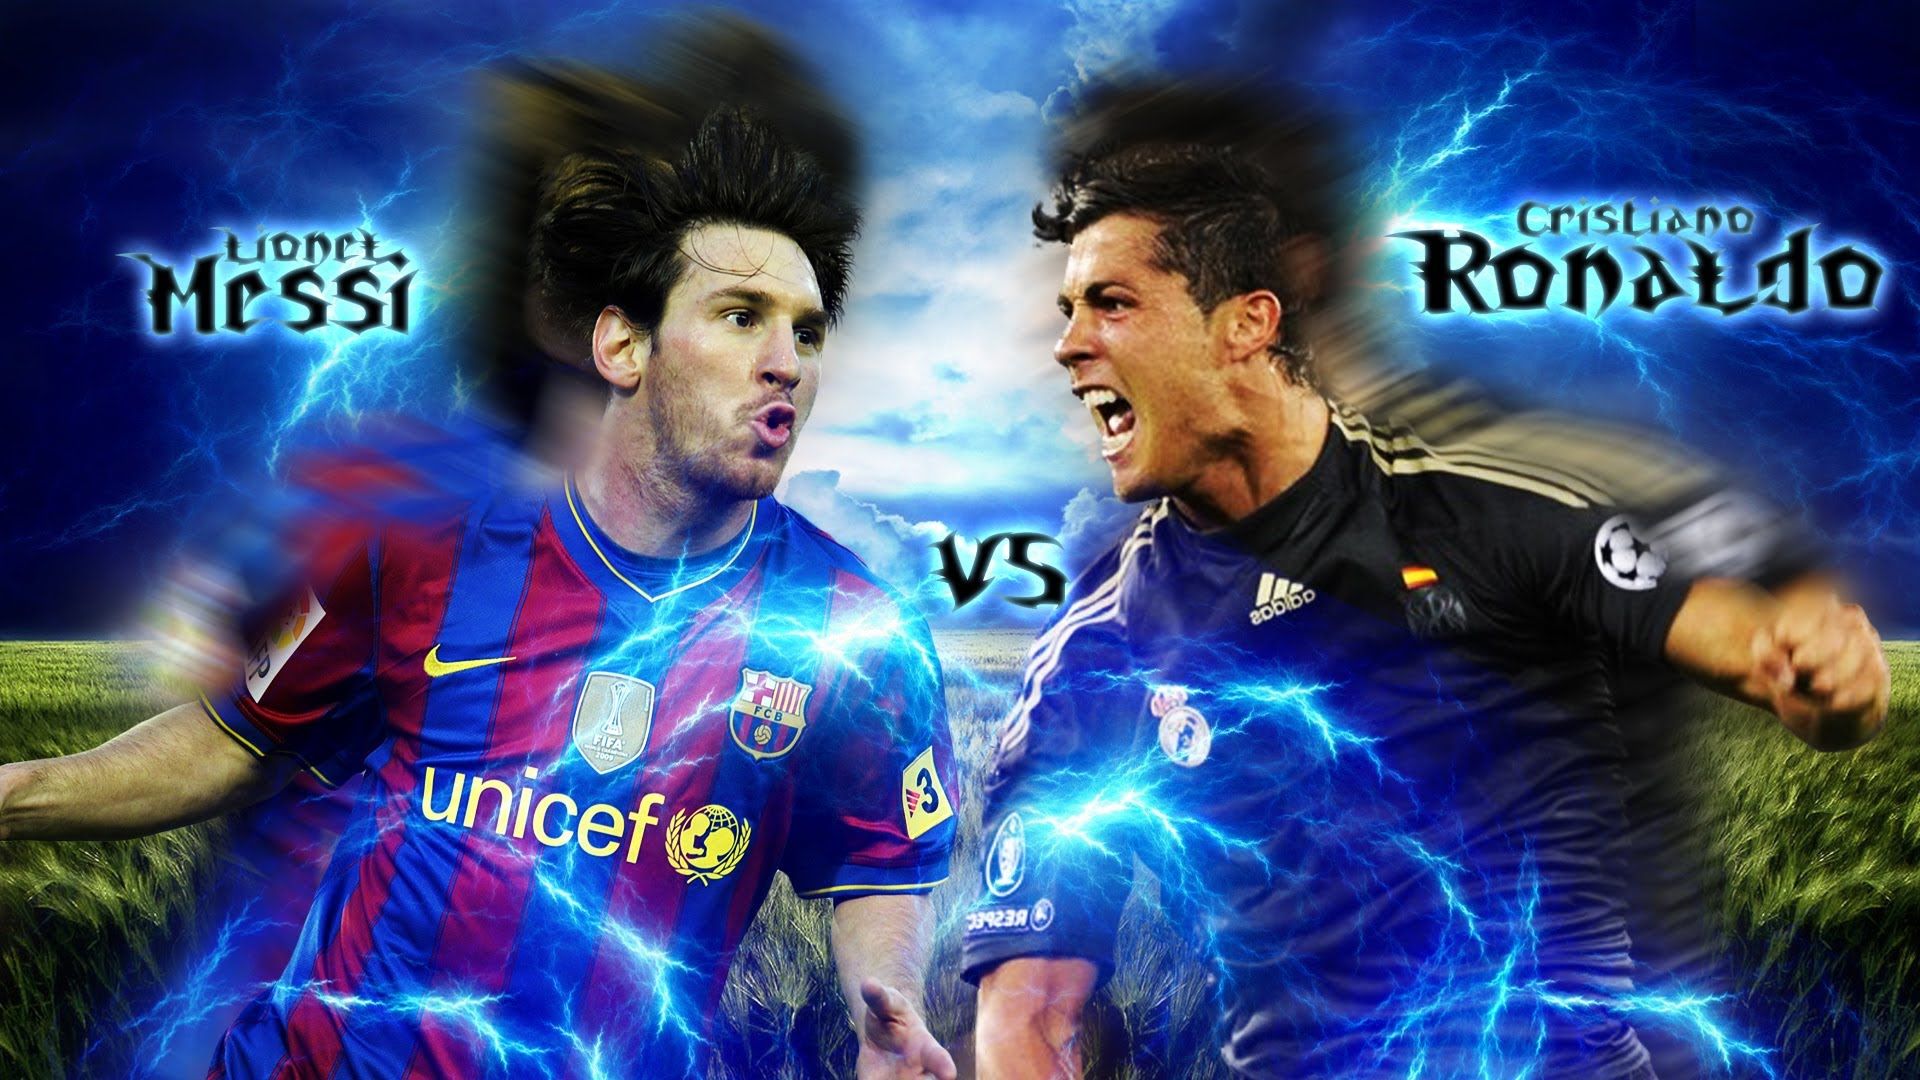 Ronaldo Vs Messi Wallpaper Full HD 8jn Awesomeness In